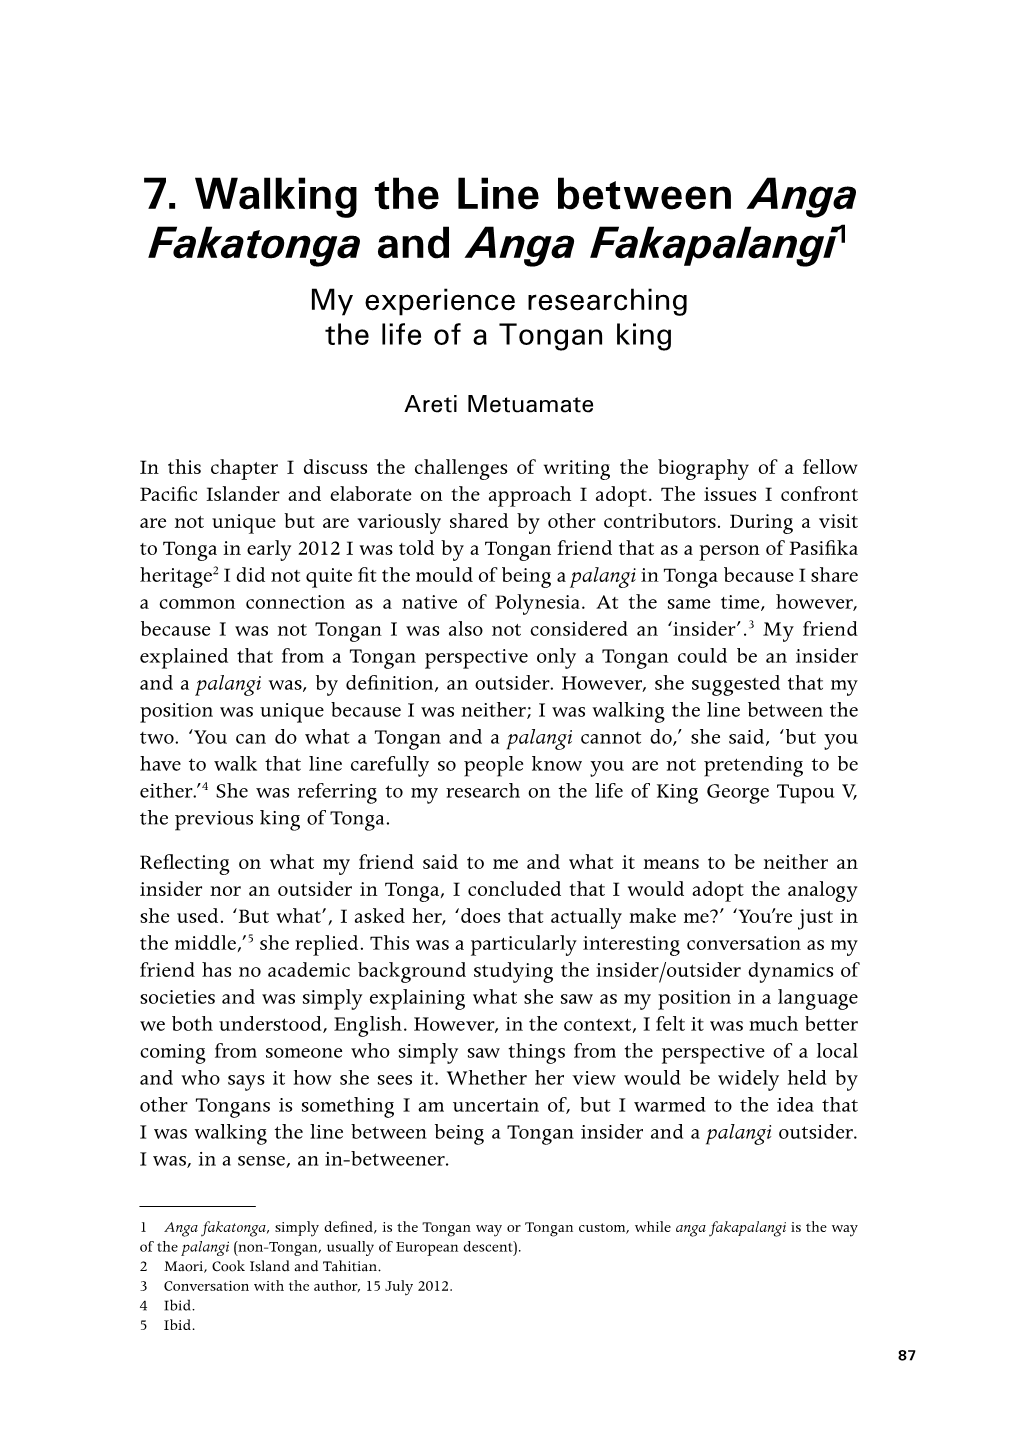 7. Walking the Line Between Anga Fakatonga and Anga Fakapalangi1 My Experience Researching the Life of a Tongan King